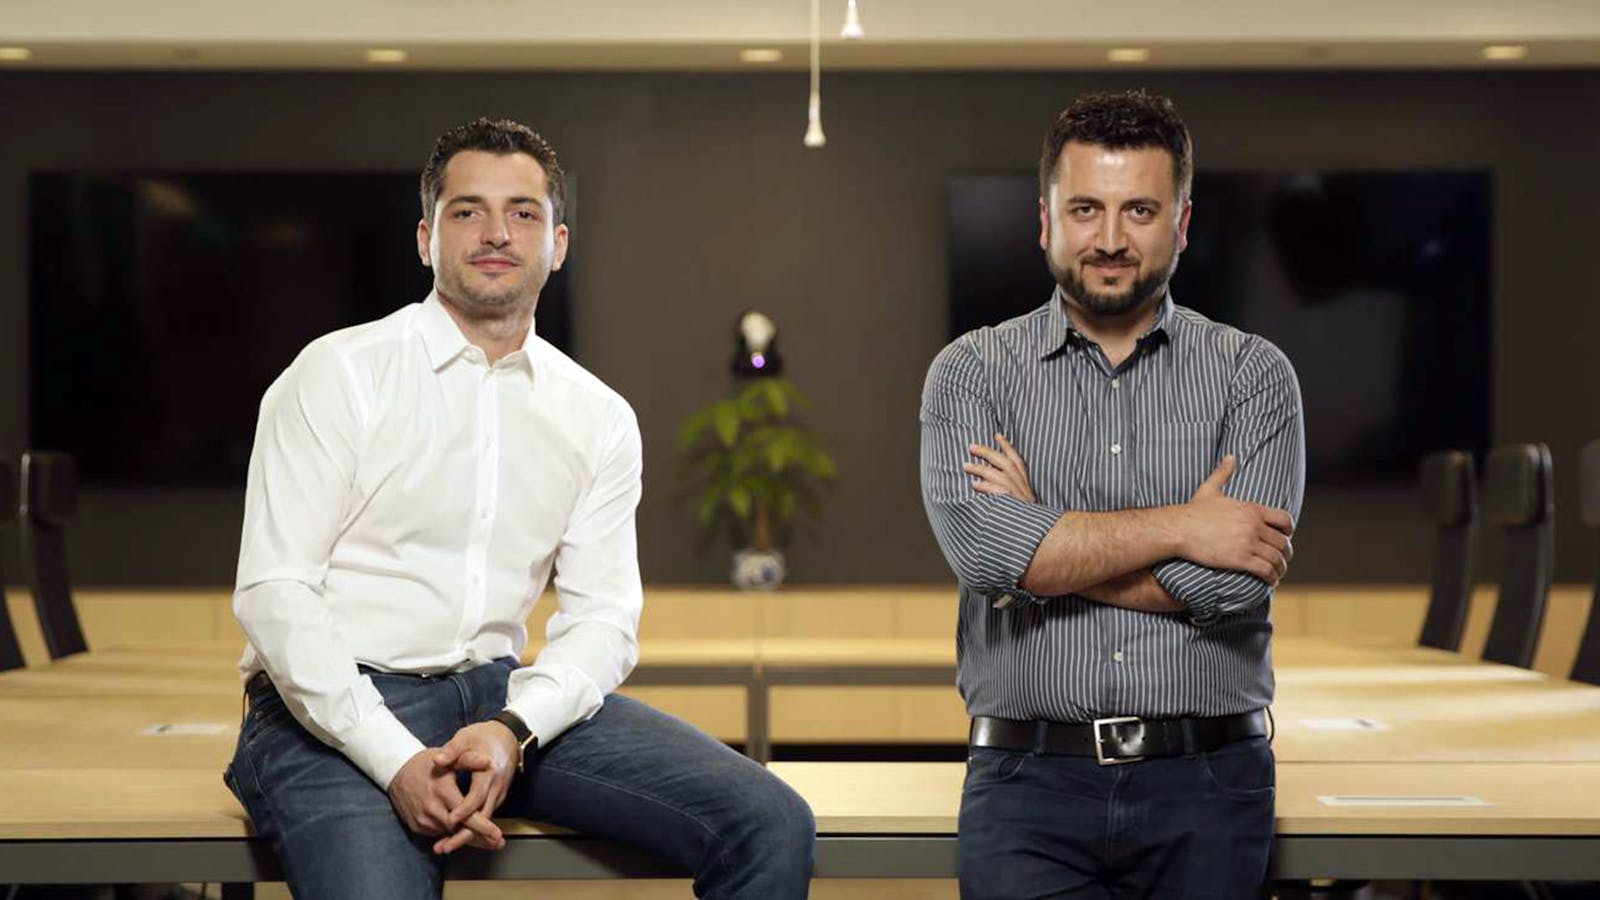 ServiceTitan's co-founders Ara Mahdessian (left) and Vahe Kuzoyan. Photo by ServiceTitan.